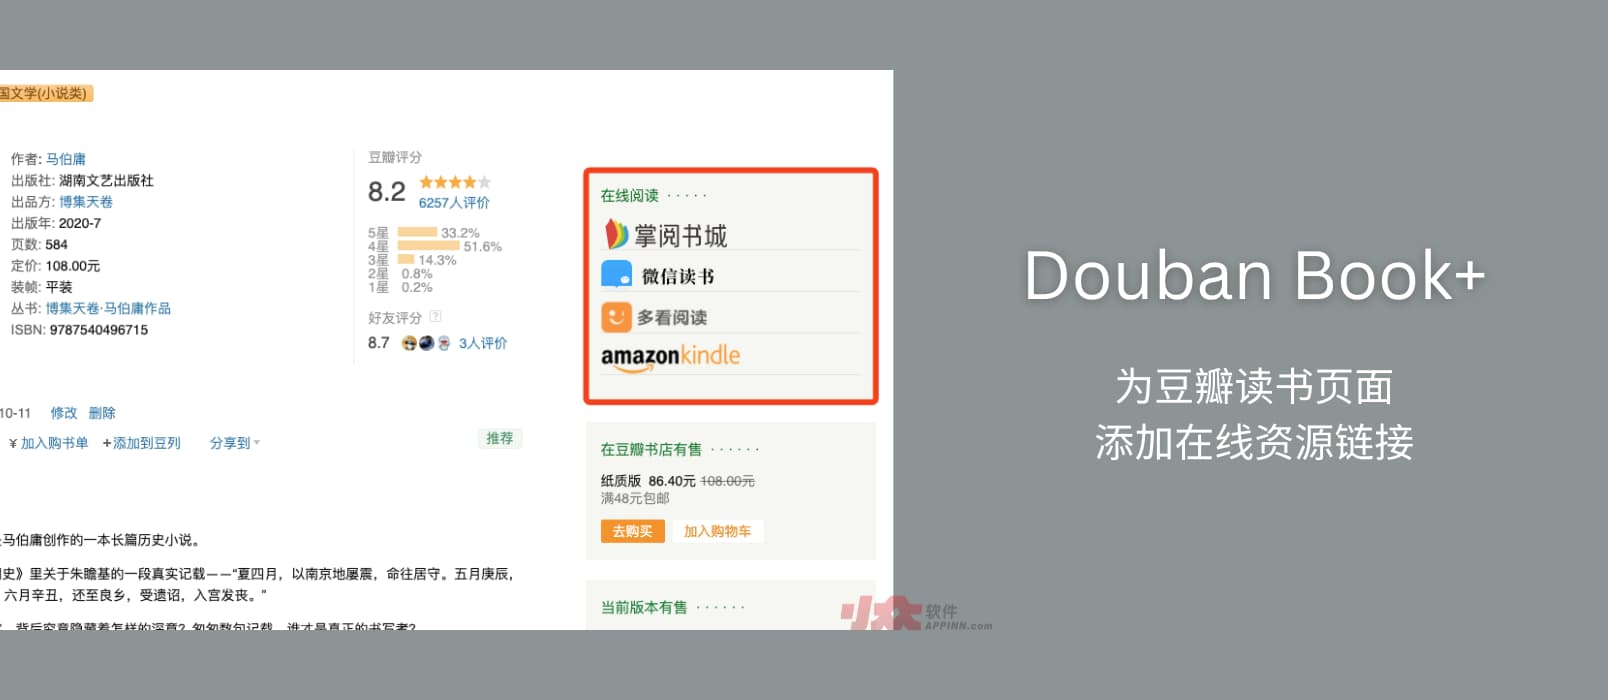 Douban Book+ - 为豆瓣读书页面添加微信读书、Kindle、多看、蜗牛等在线资源链接